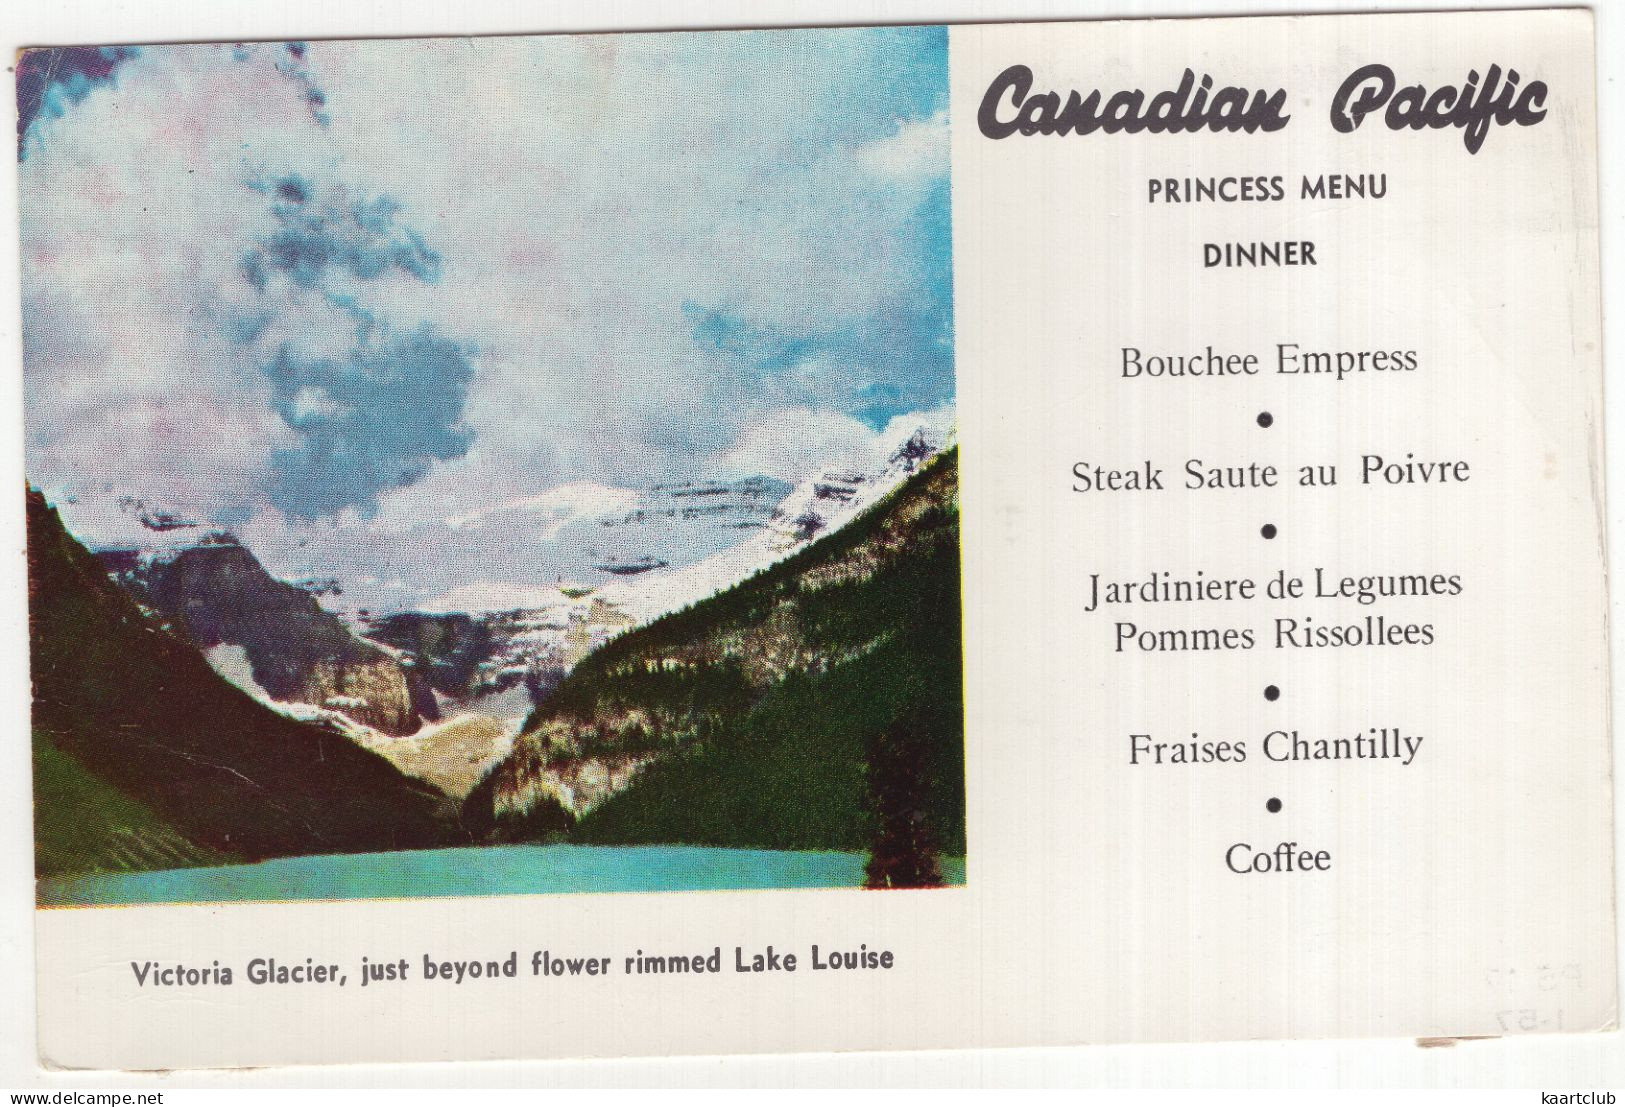 Canadian Pacific Airlines: 'Princess Menu Dinner' - Victoria Glacier, Lake Louise  - (Alberta, Canada) - Banff